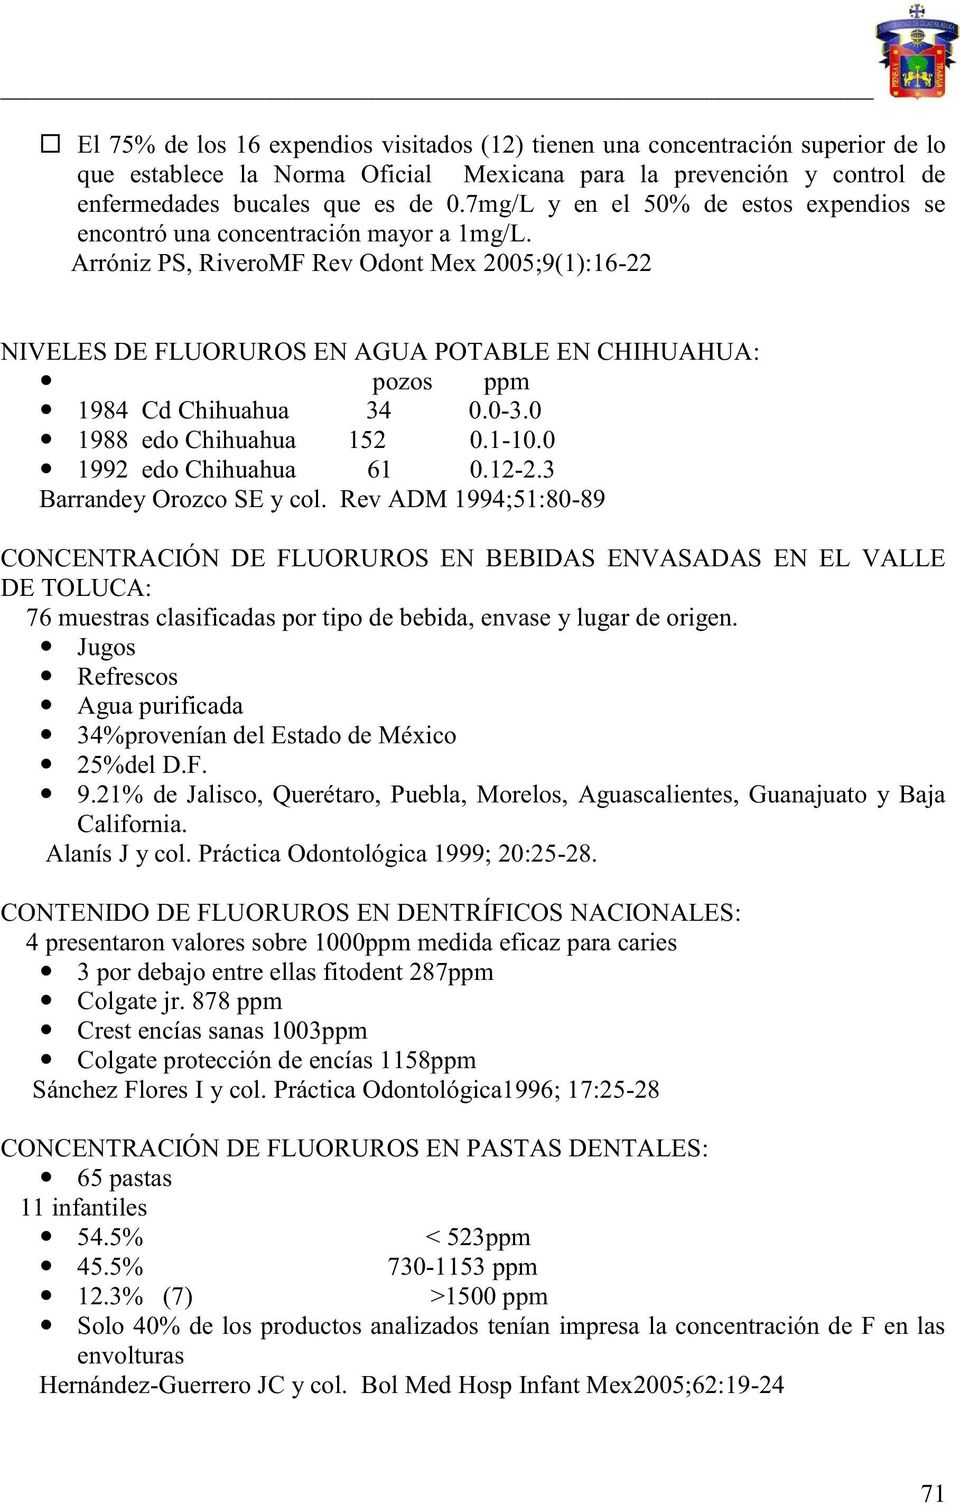 Arróniz PS, RiveroMF Rev Odont Mex 2005;9(1):16-22 NIVELES DE FLUORUROS EN AGUA POTABLE EN CHIHUAHUA: pozos ppm 1984 Cd Chihuahua 34 0.0-3.0 1988 edo Chihuahua 152 0.1-10.0 1992 edo Chihuahua 61 0.